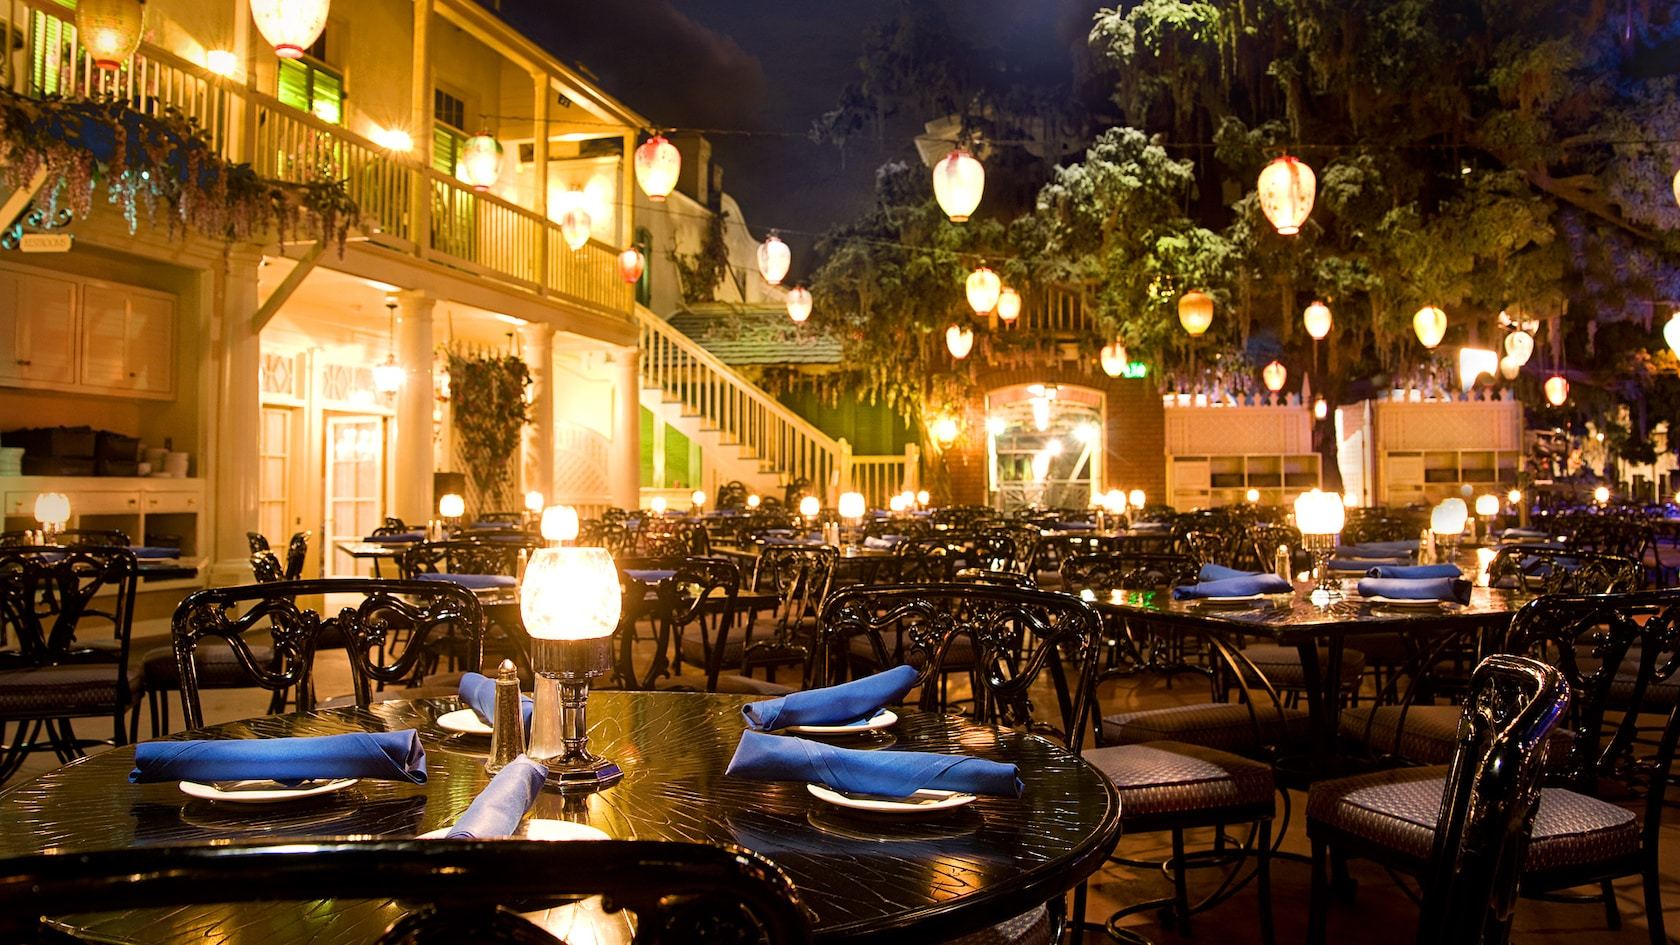 Blue Bayou Restaurant in New Orleans Square romantic restaurant at Disneyland